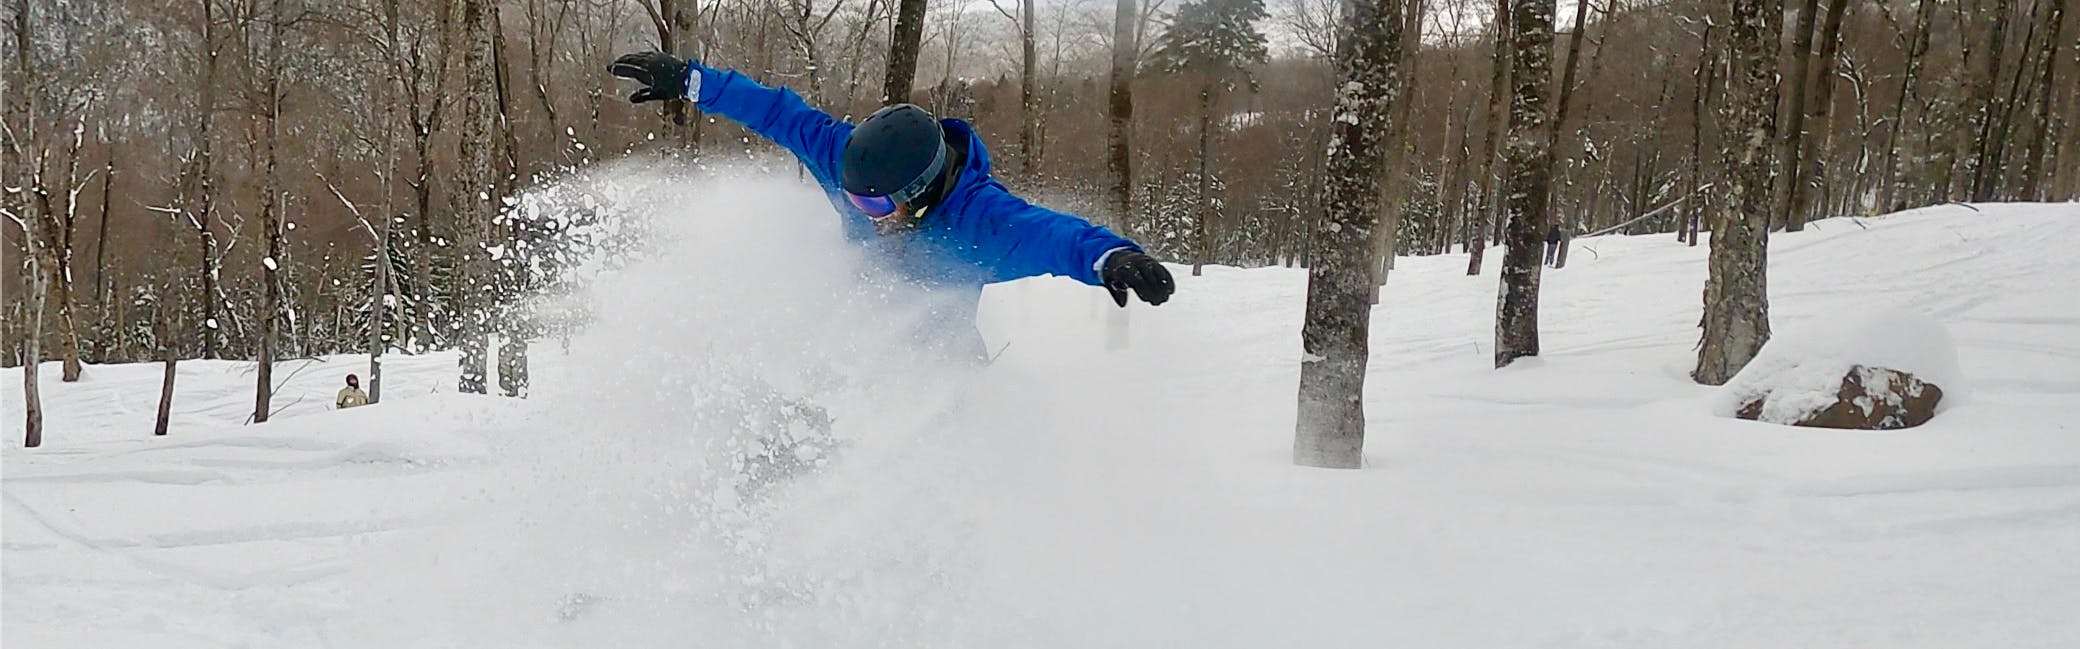 Curated expert Franco DiRienzo blasts through deep powder on his snowboard